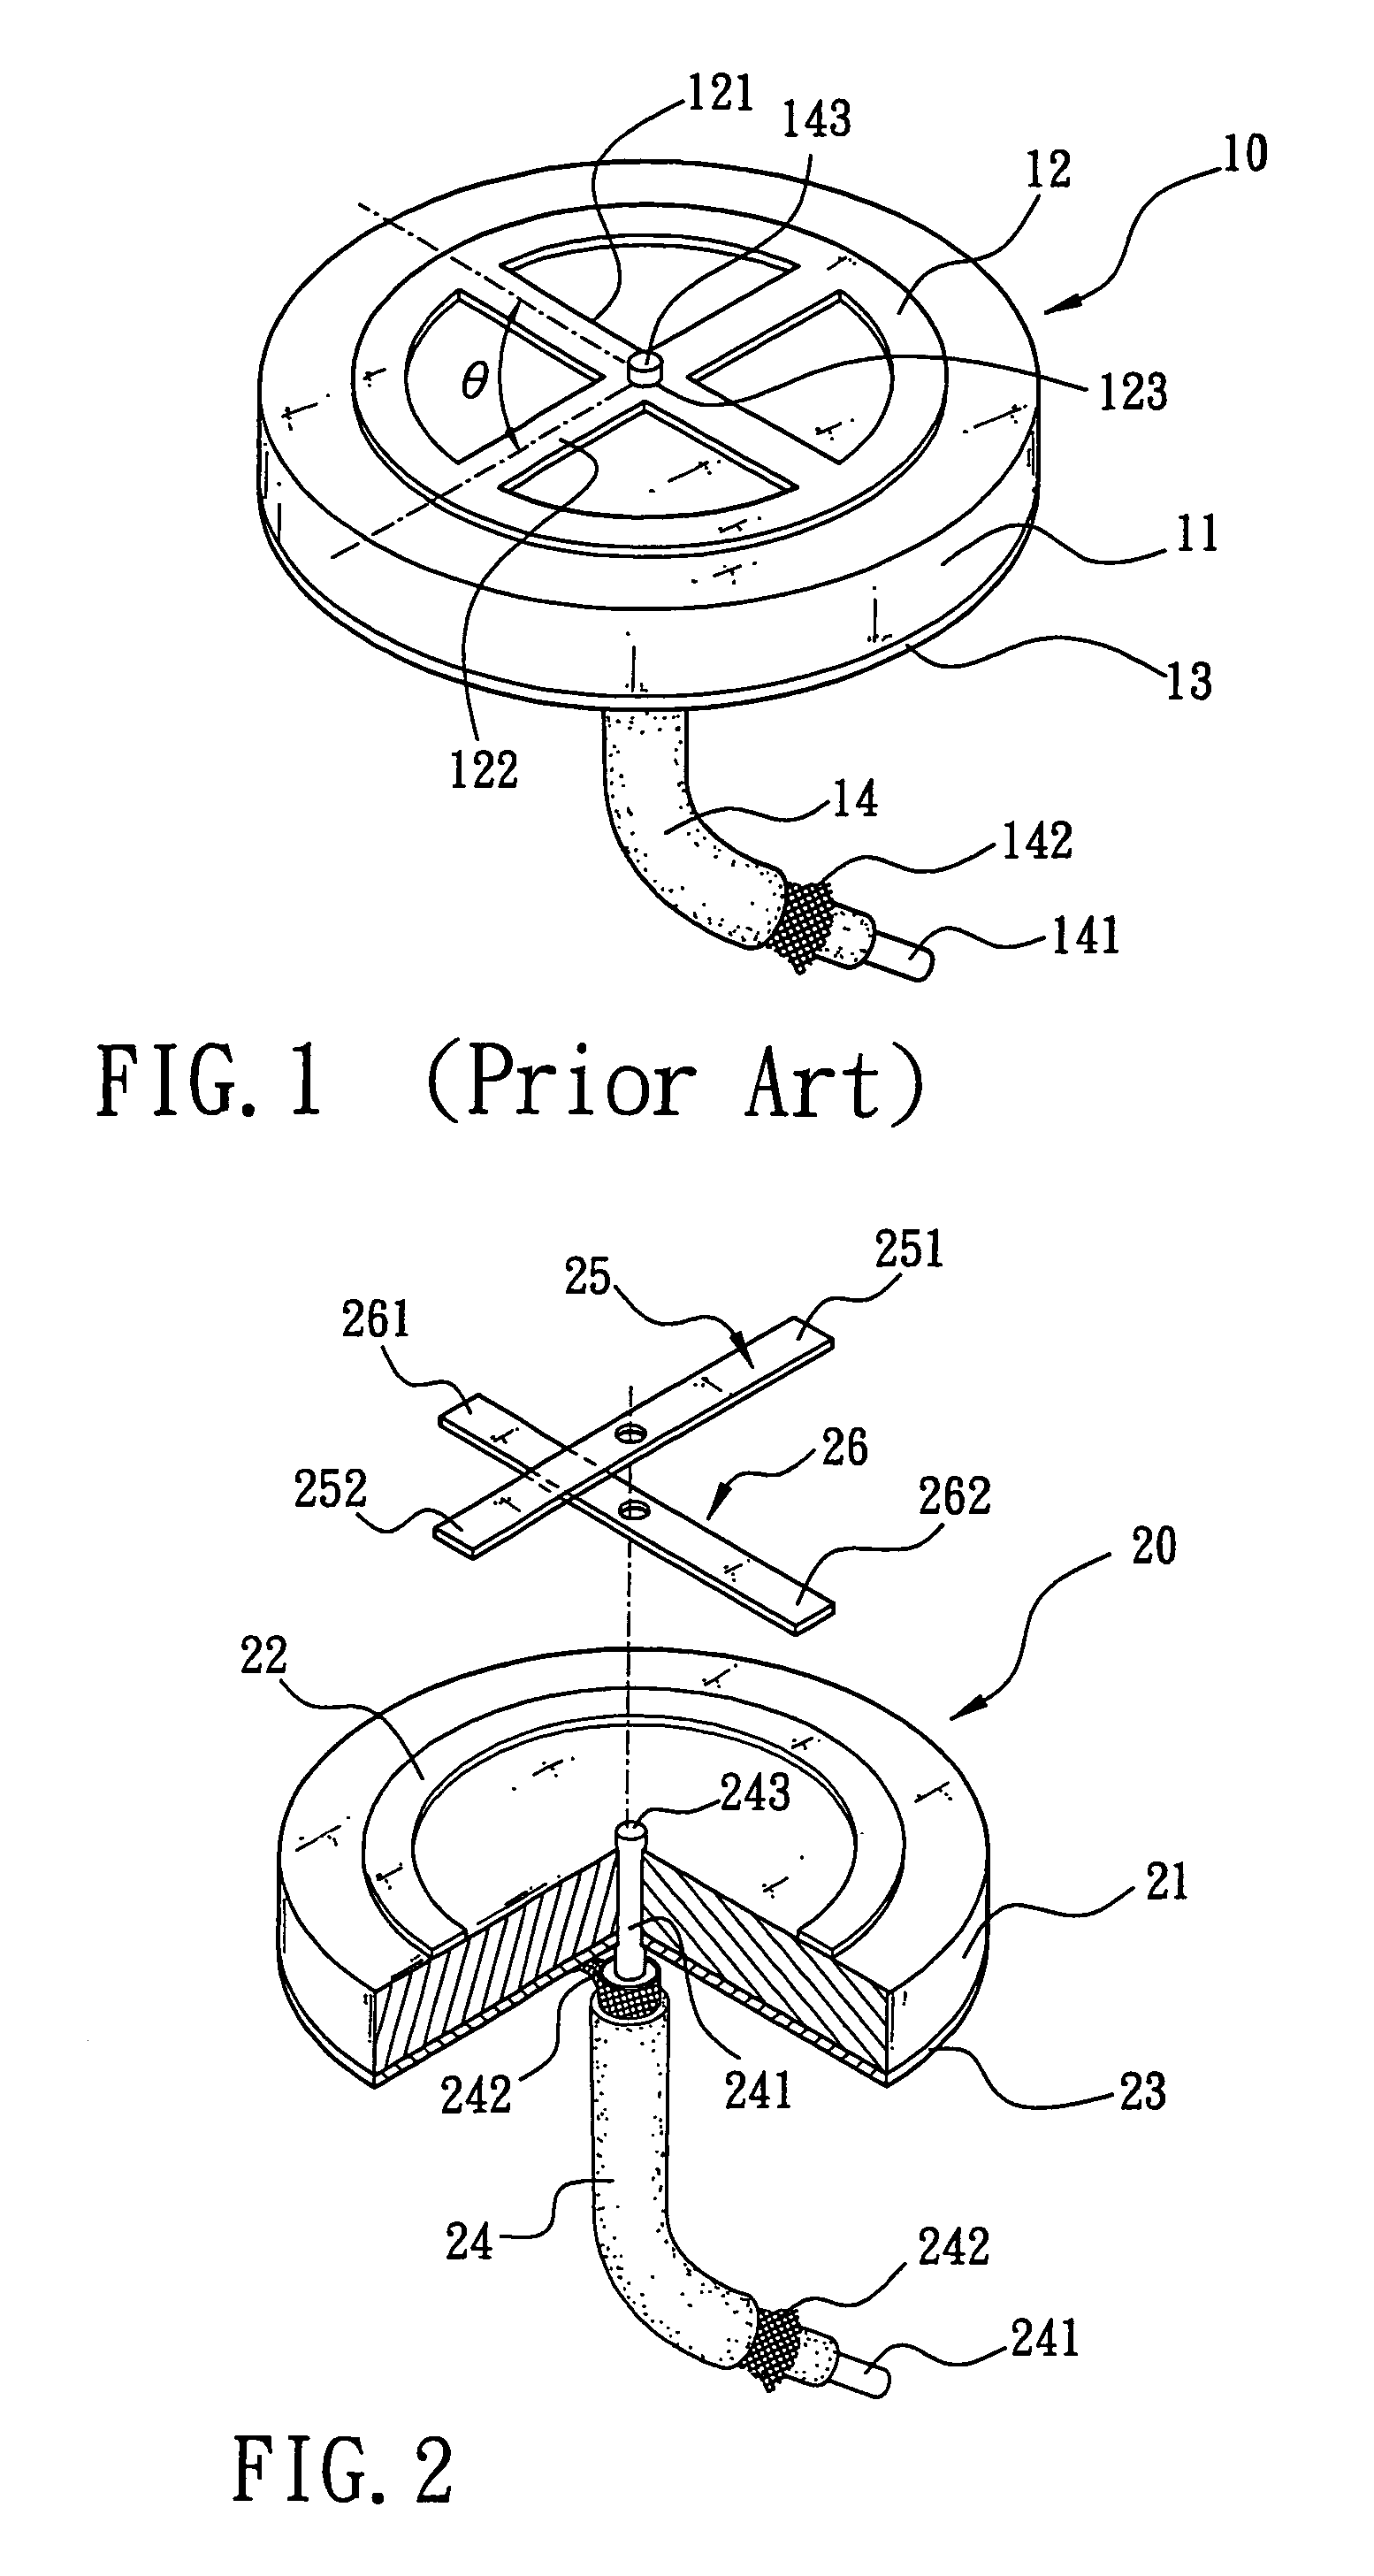 Disk-shaped antenna with polarization adjustment arrangement